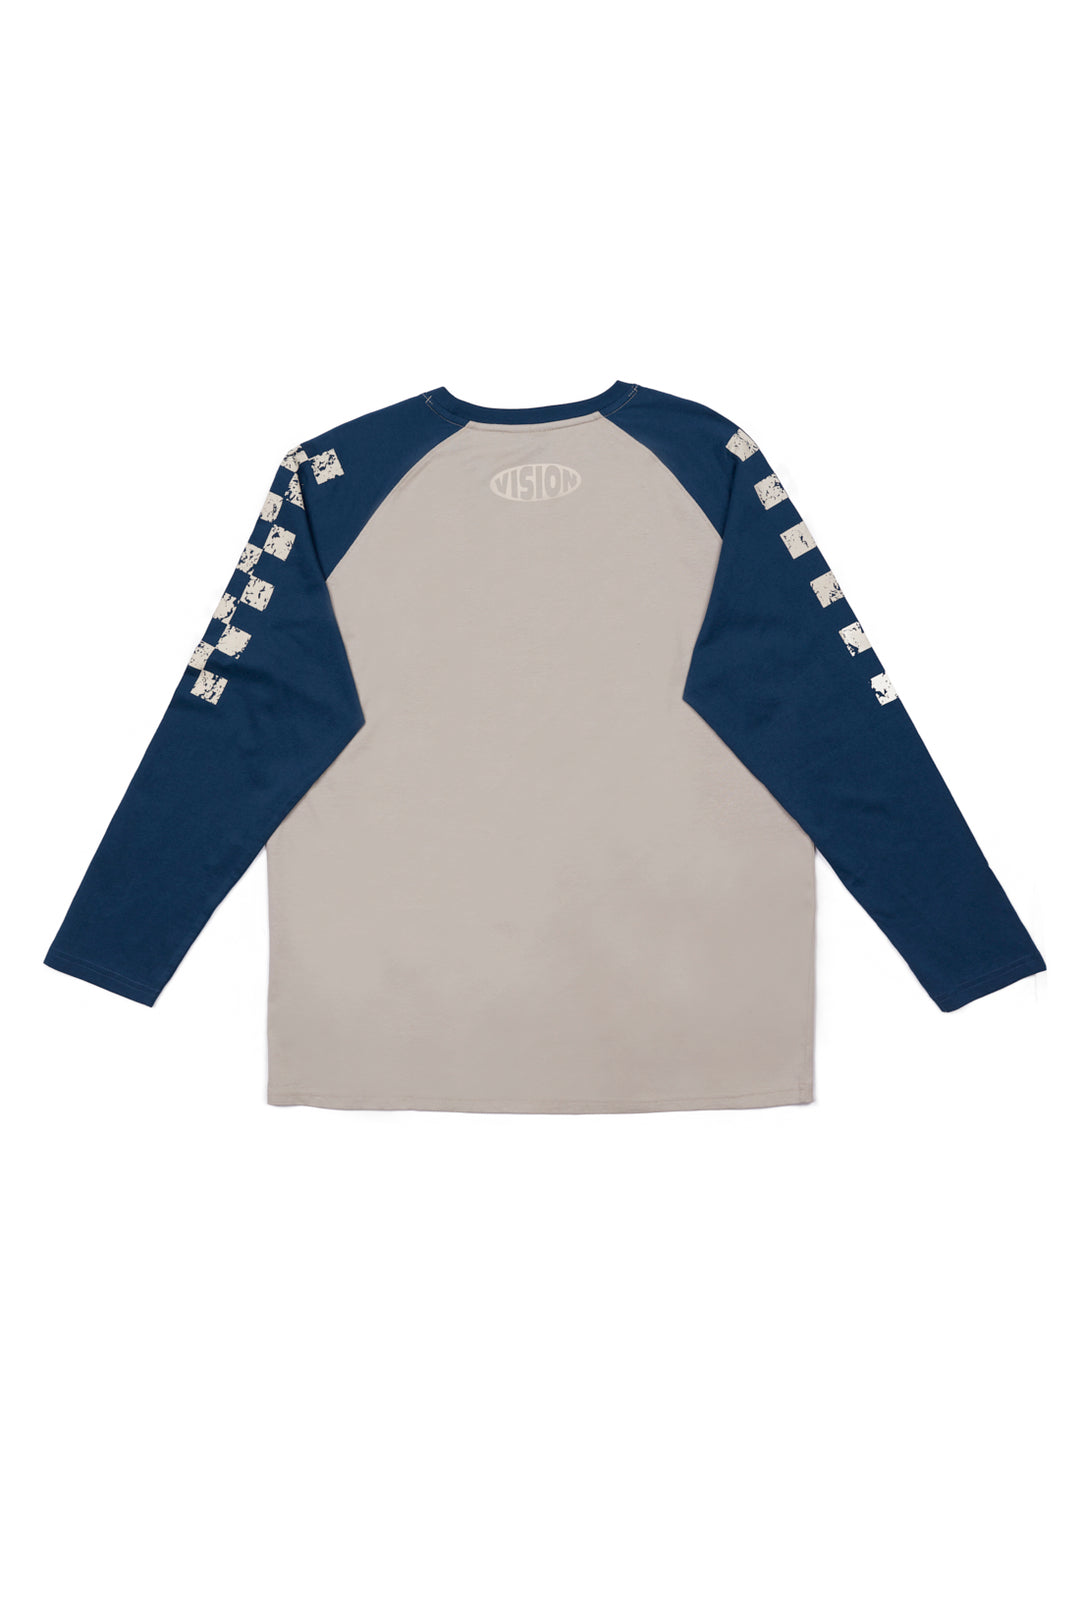 Checker Print Sleeve Logo T-Shirt - Mushroom/Navy